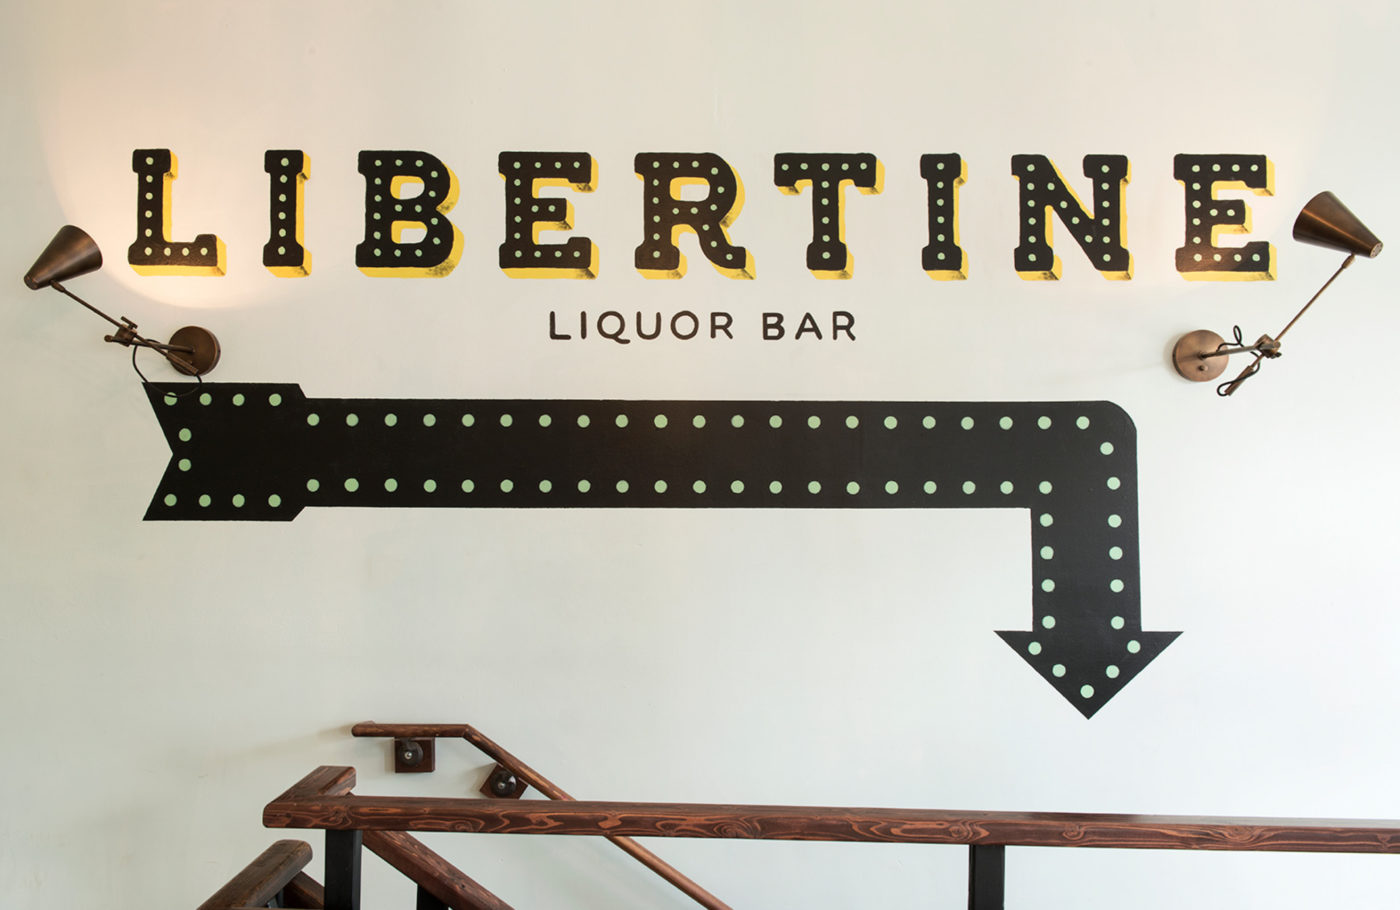 Libertine Liquor Bar Branding by CODO Design.